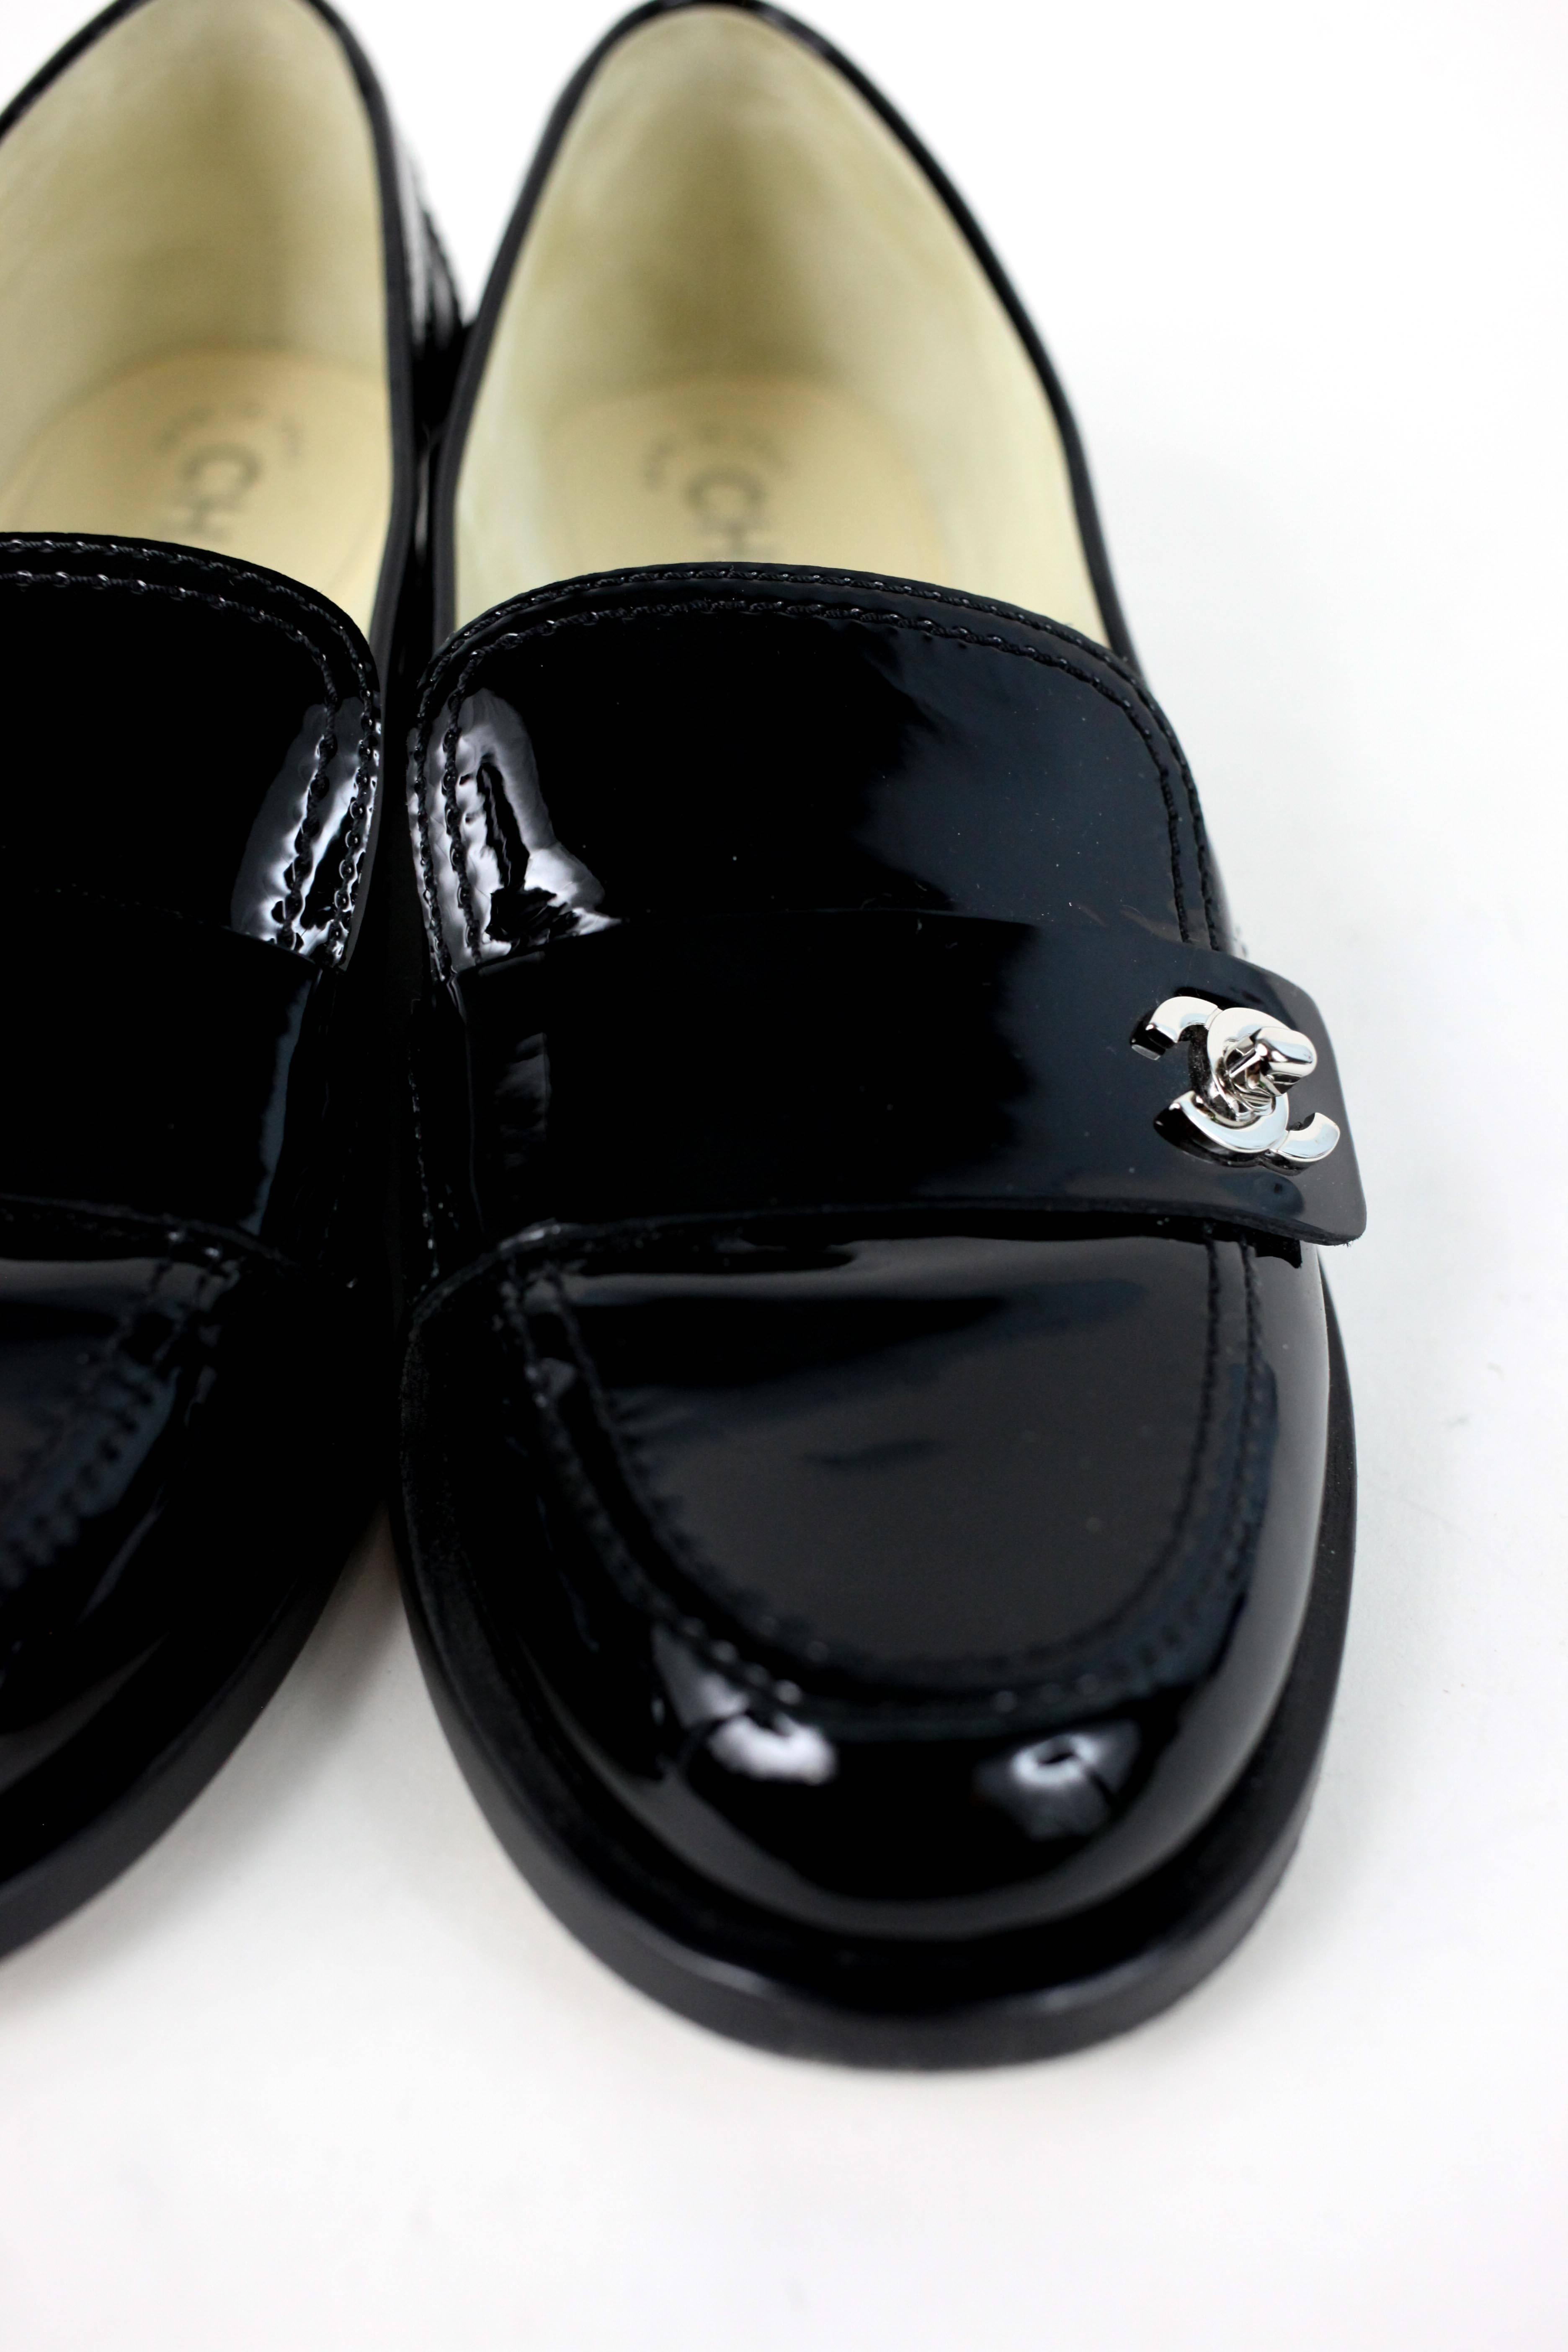 Chanel Loafer Black W/CC 36 6